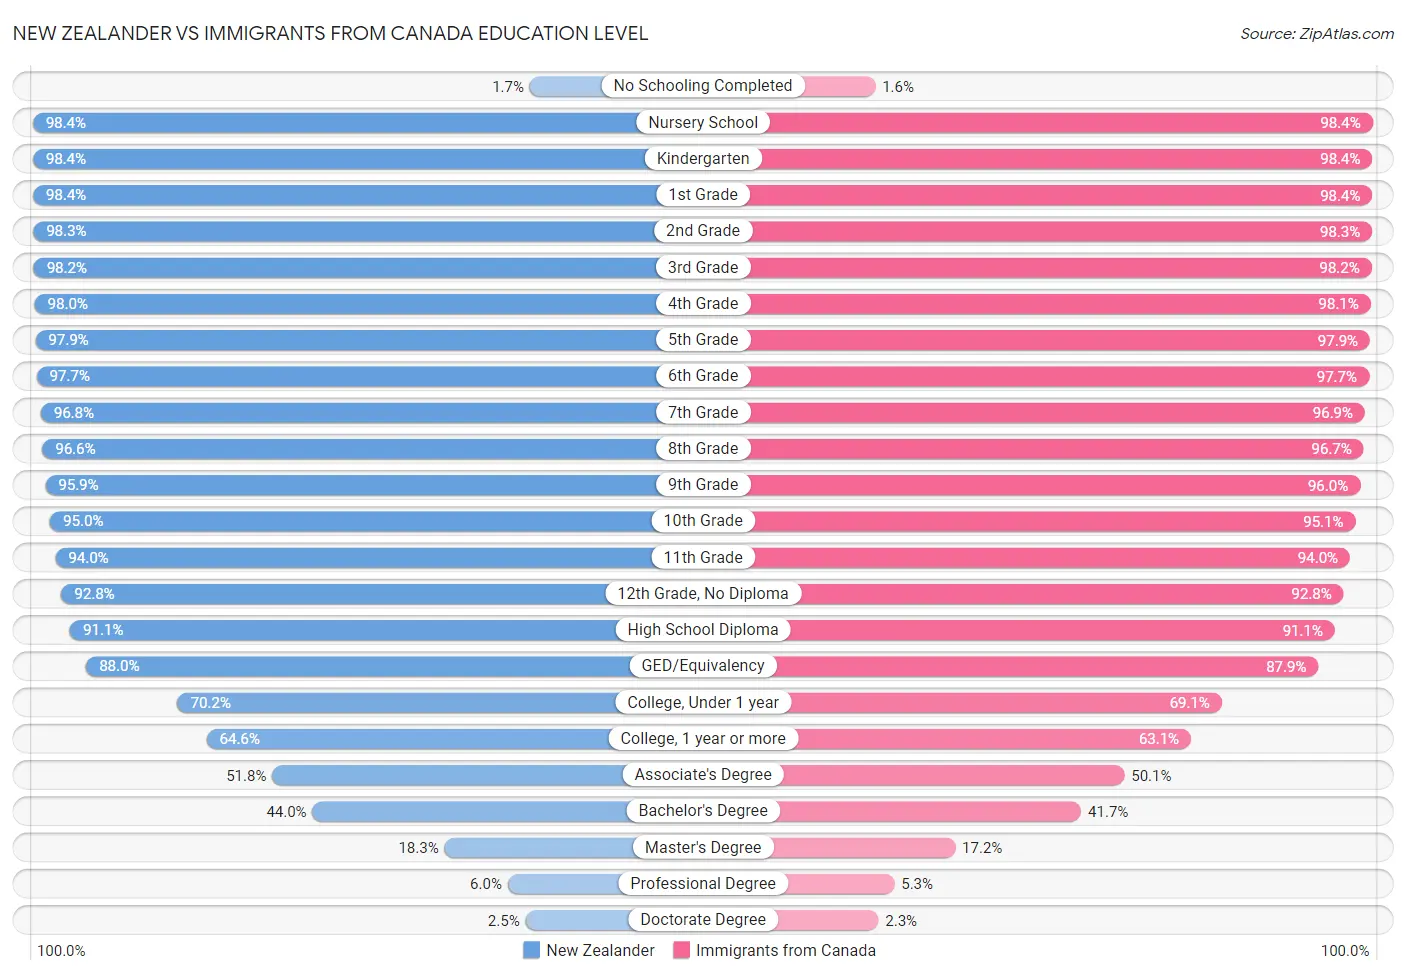 New Zealander vs Immigrants from Canada Education Level